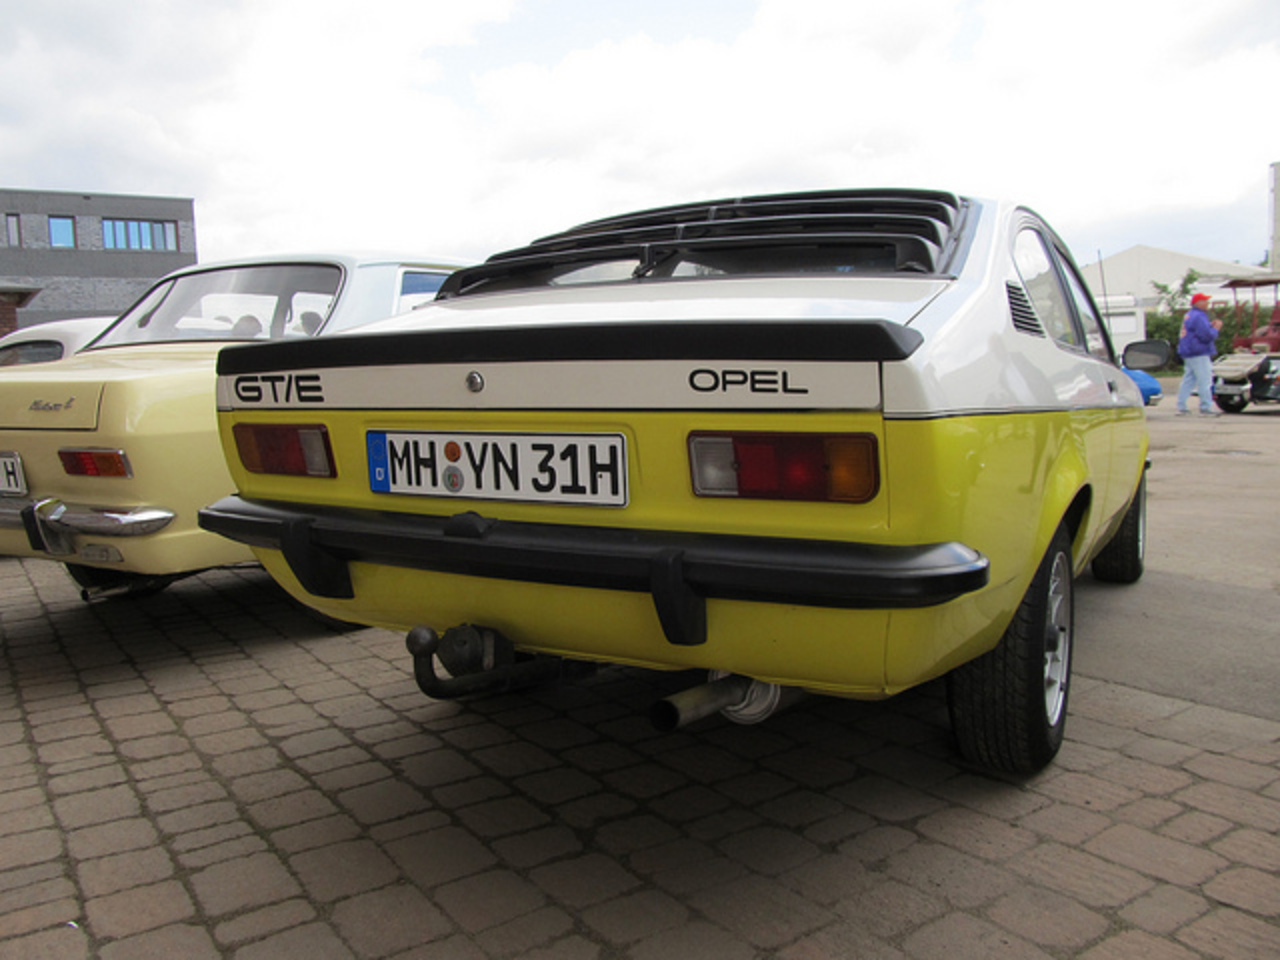 Opel Kadett C GTE Coupe | Flickr - Photo Sharing!